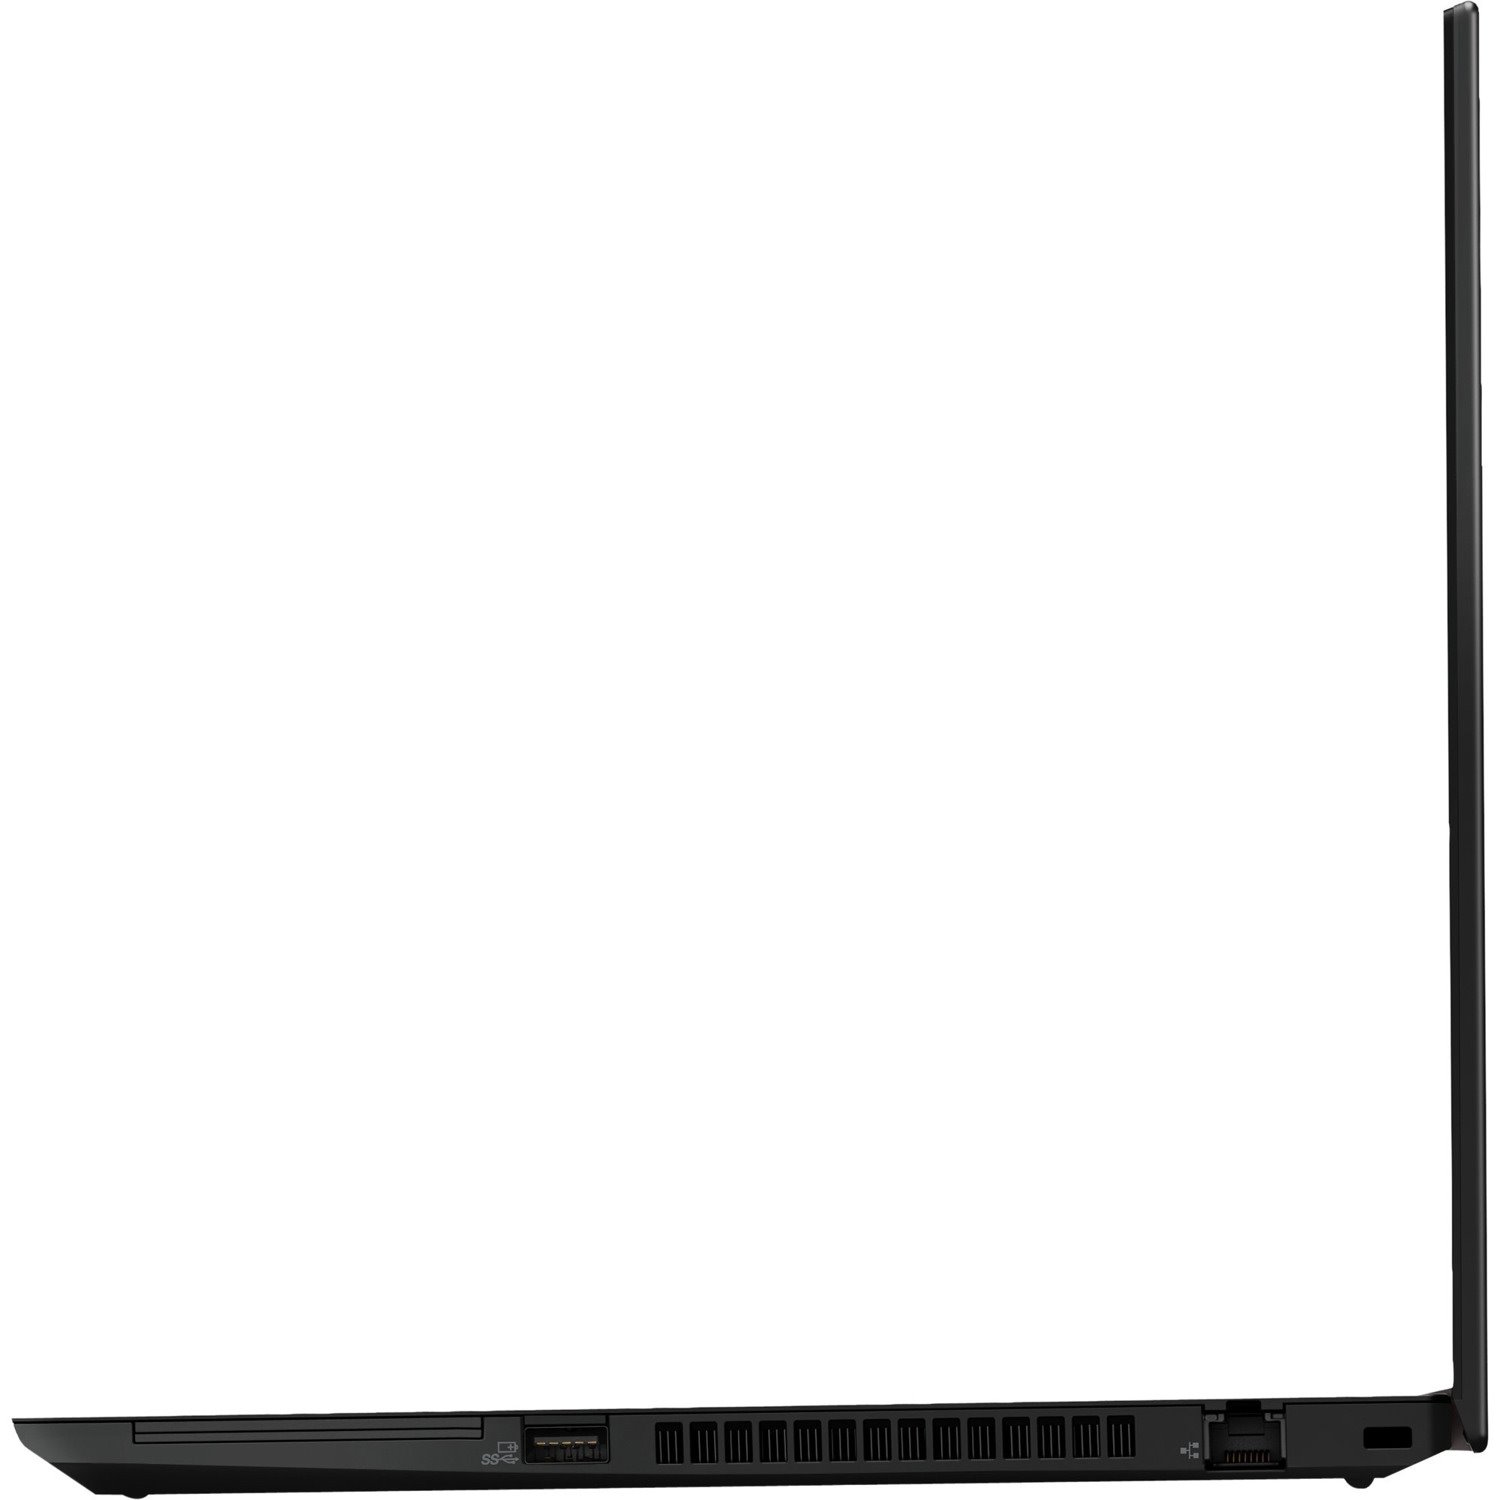 Lenovo ThinkPad T495 20NJS02C00 35.6 cm (14") Notebook - Full HD - 1920 x 1080 - AMD Ryzen 5 3500U Quad-core (4 Core) 2.10 GHz - 16 GB RAM - 256 GB SSD - Glossy Black